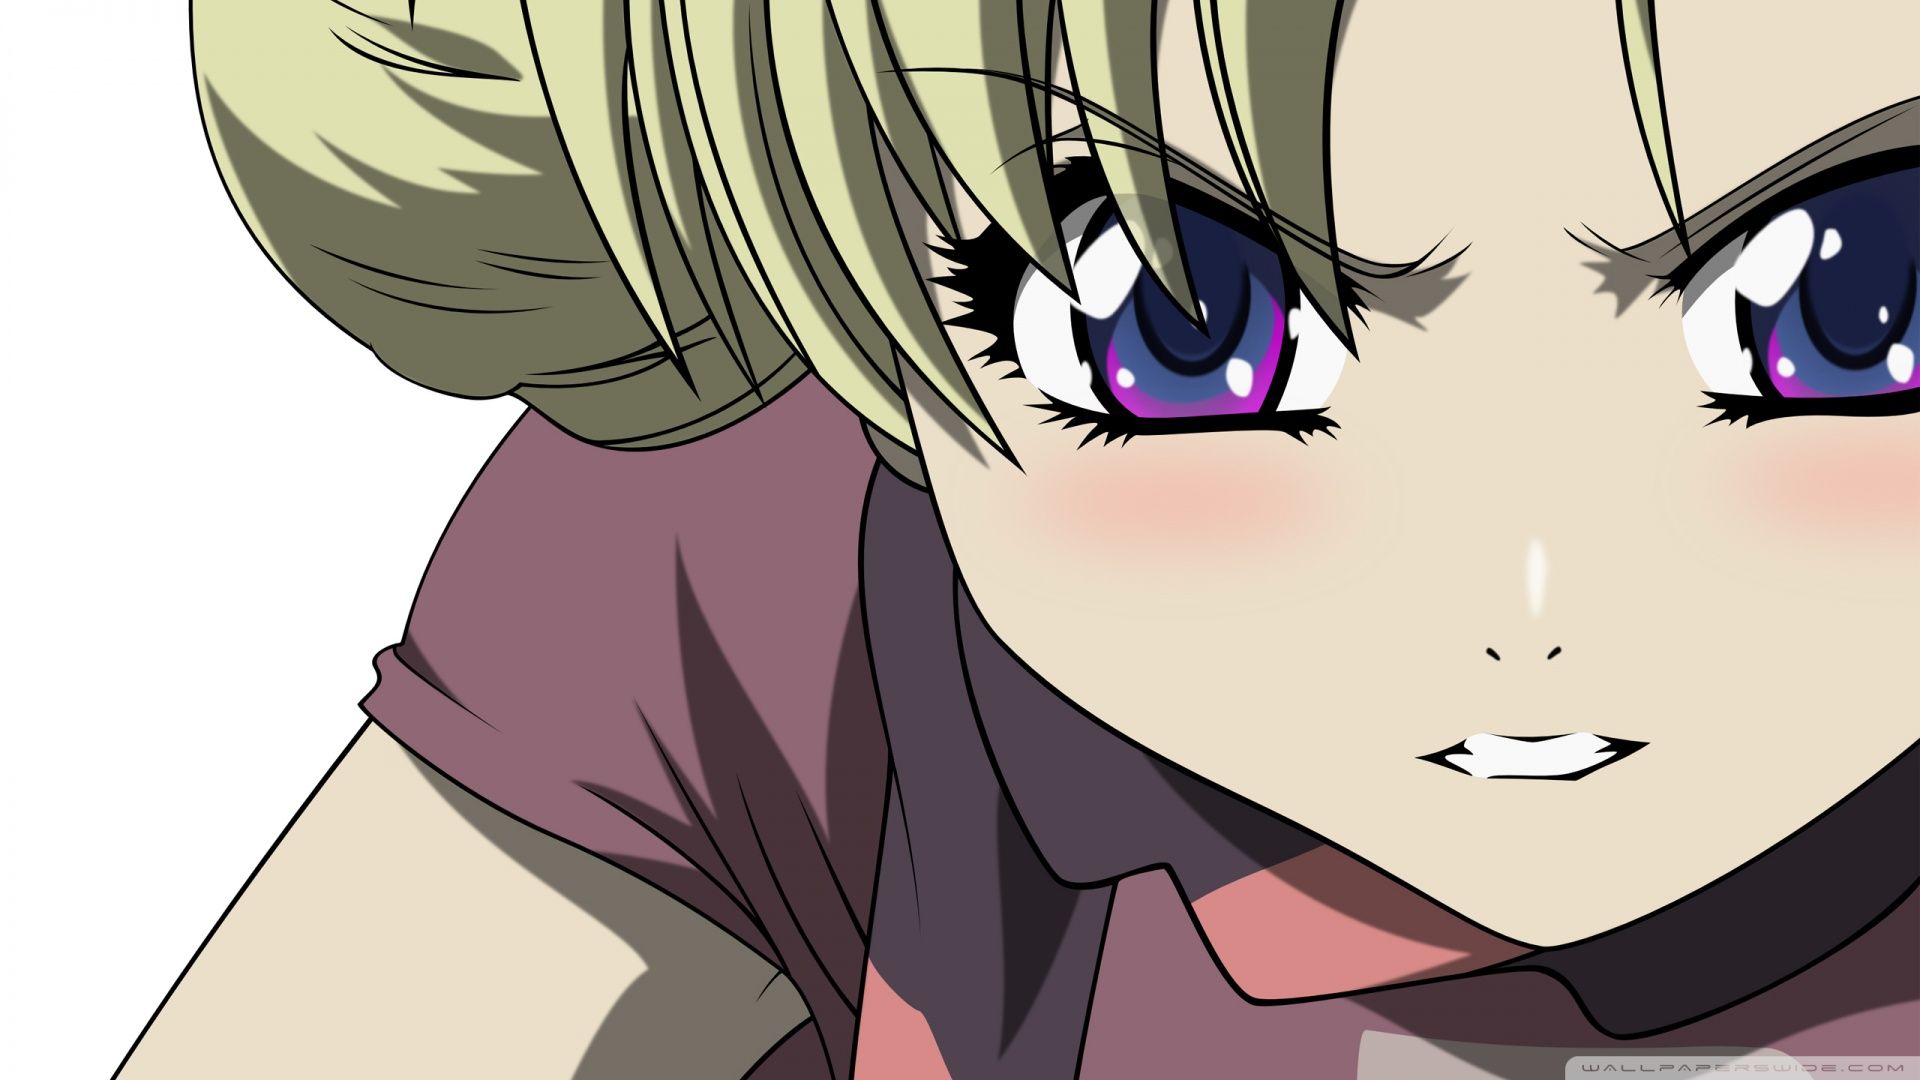 Angry Girl Anime Ultra HD Desktop Background Wallpaper for 4K UHD